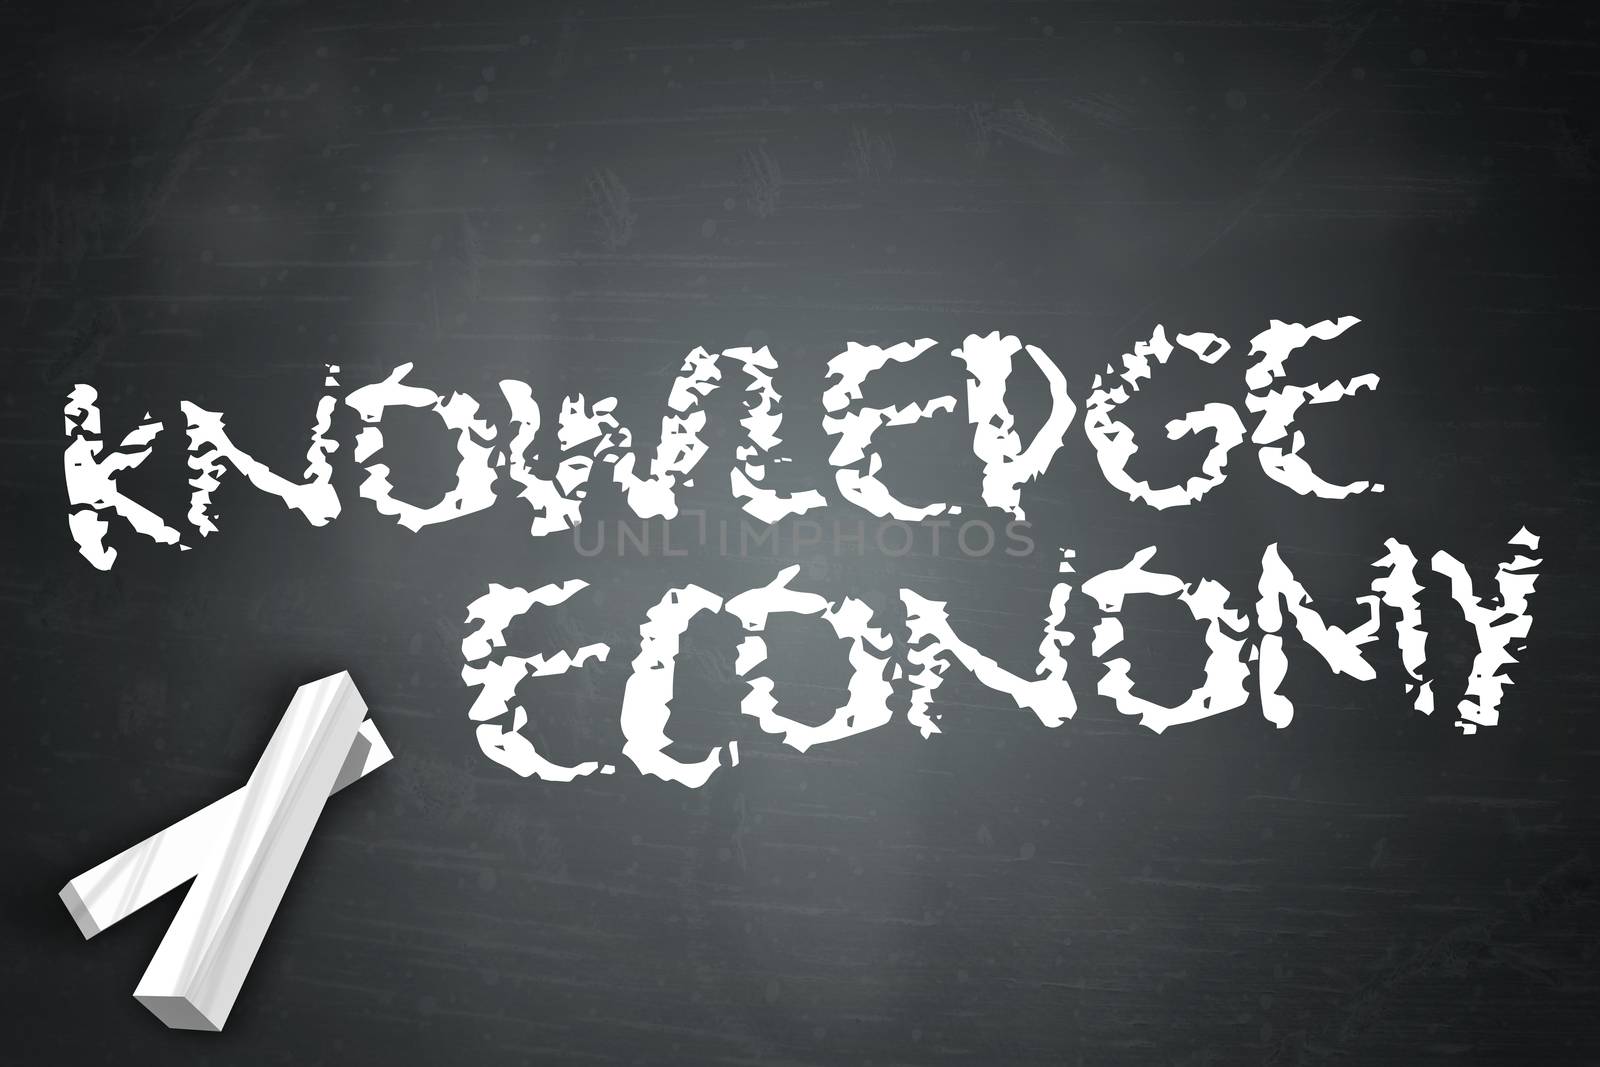 Blackboard Knowledge Economy by mindscanner